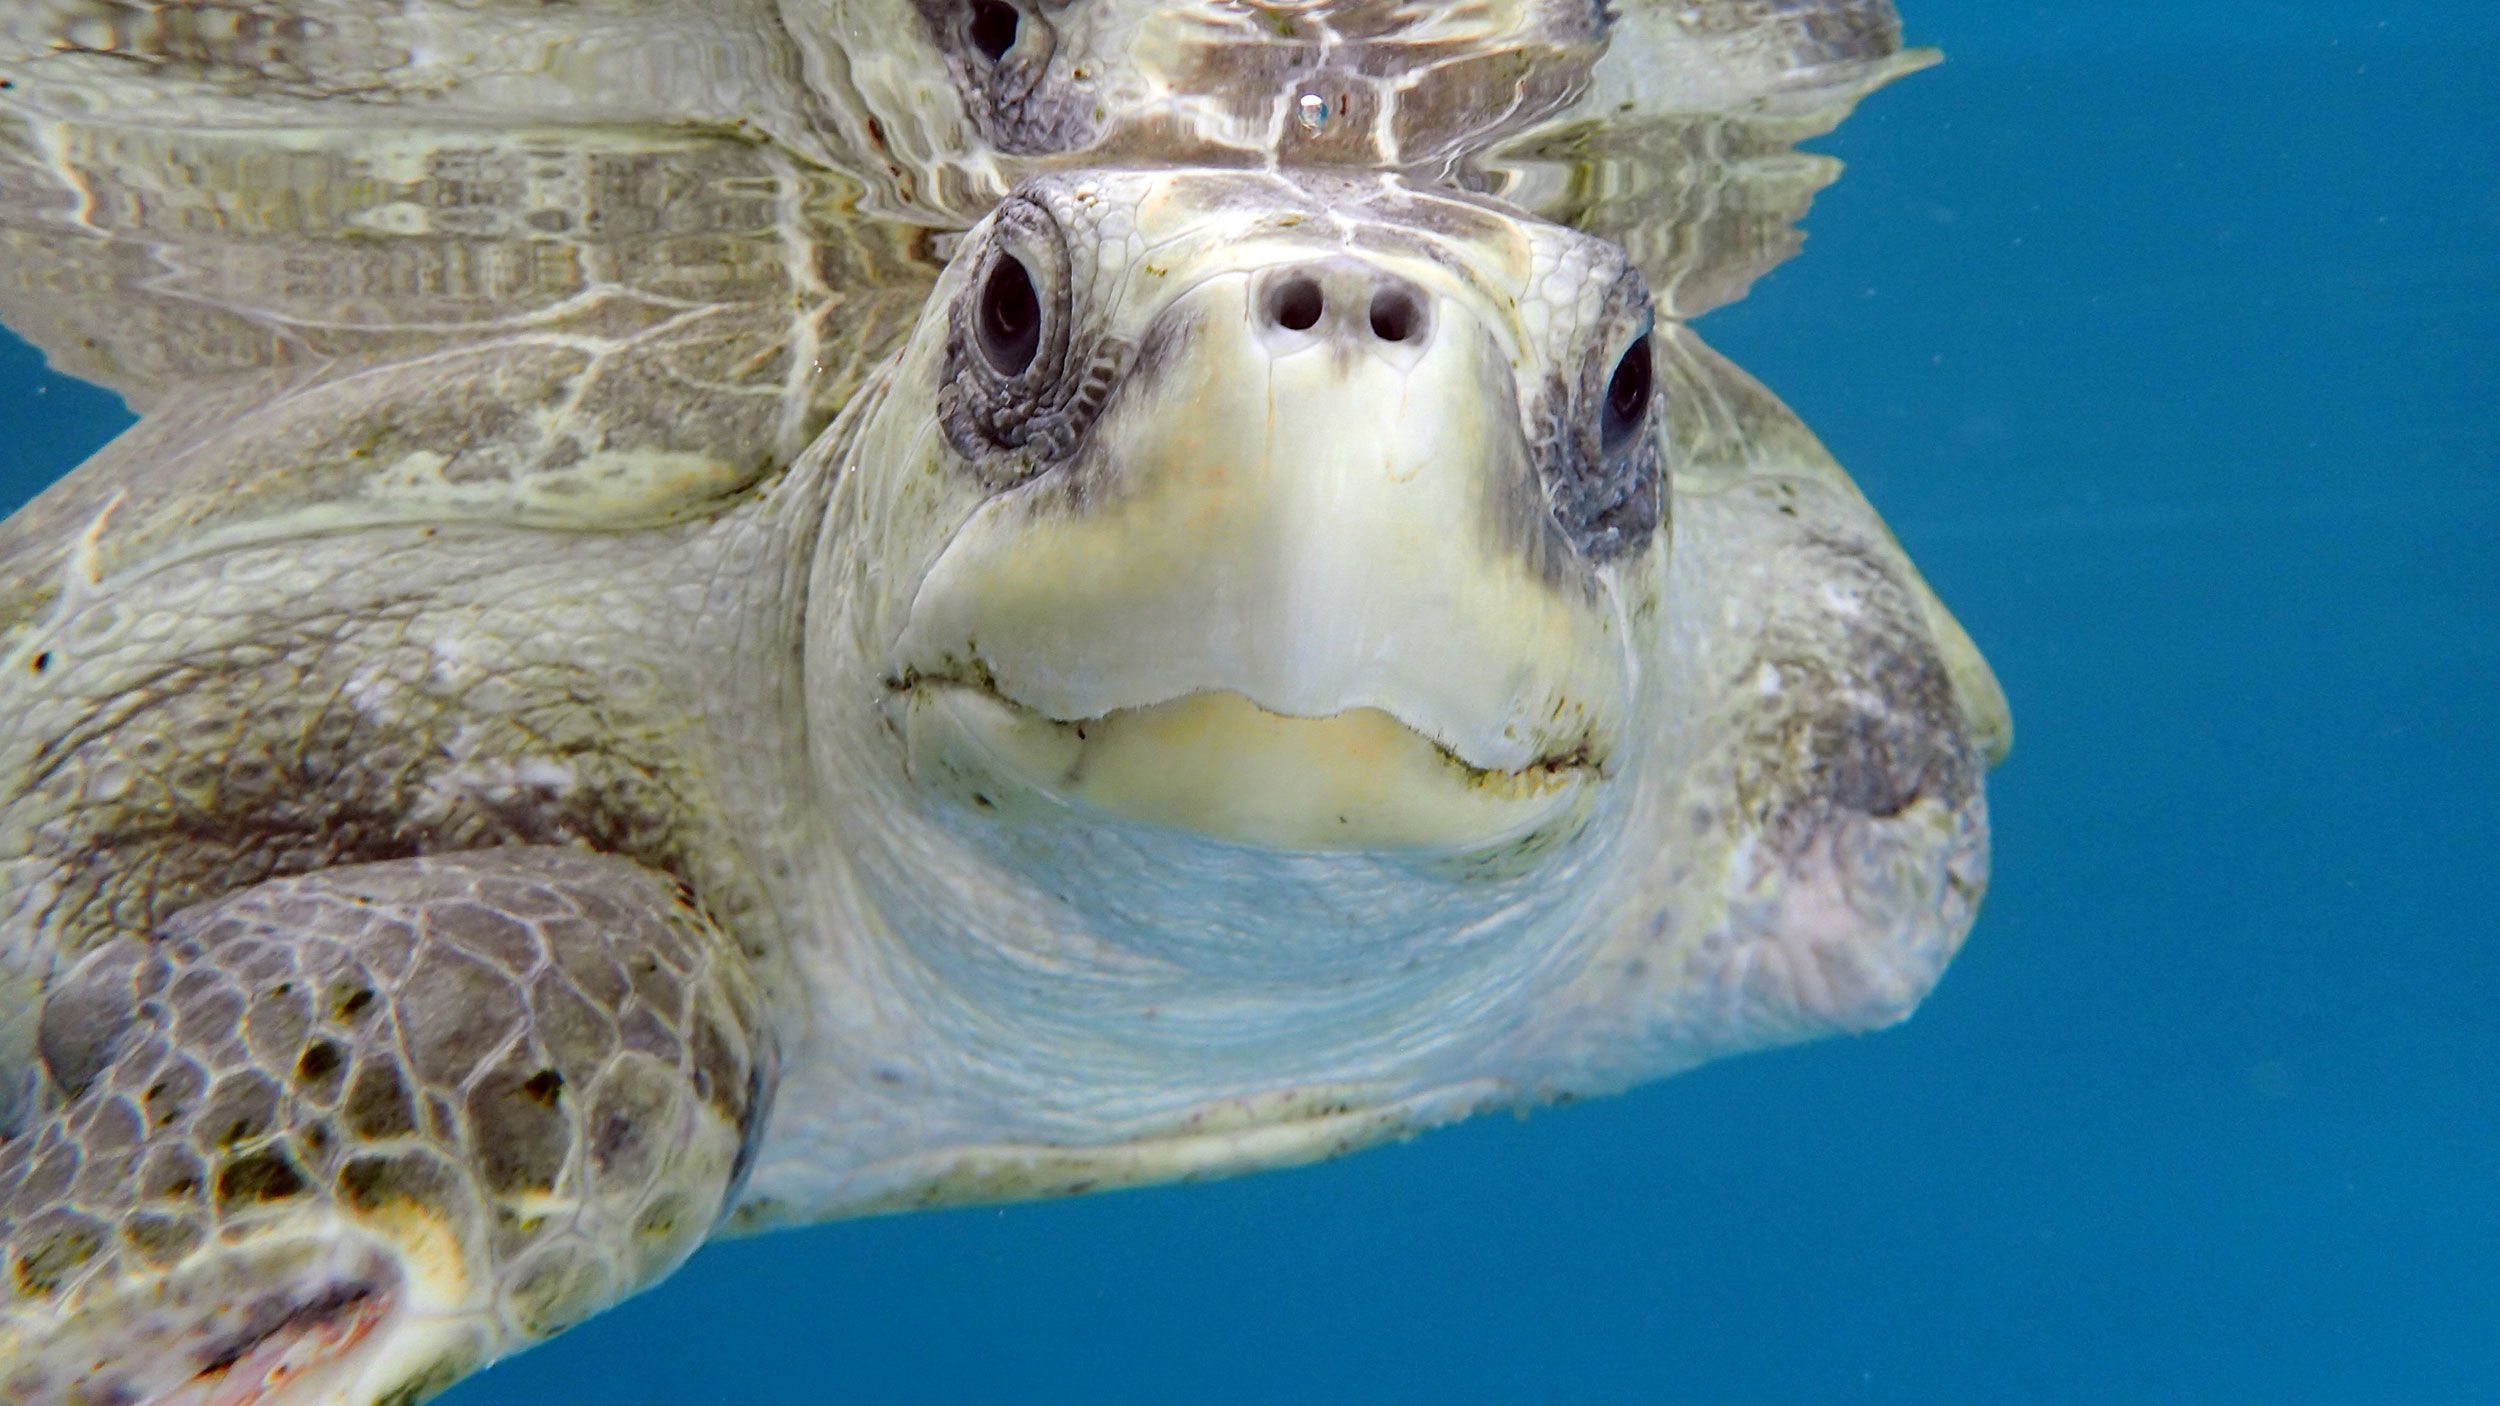 Fishing Gear Tips to Protect Sea Turtles - Clearwater Marine Aquarium